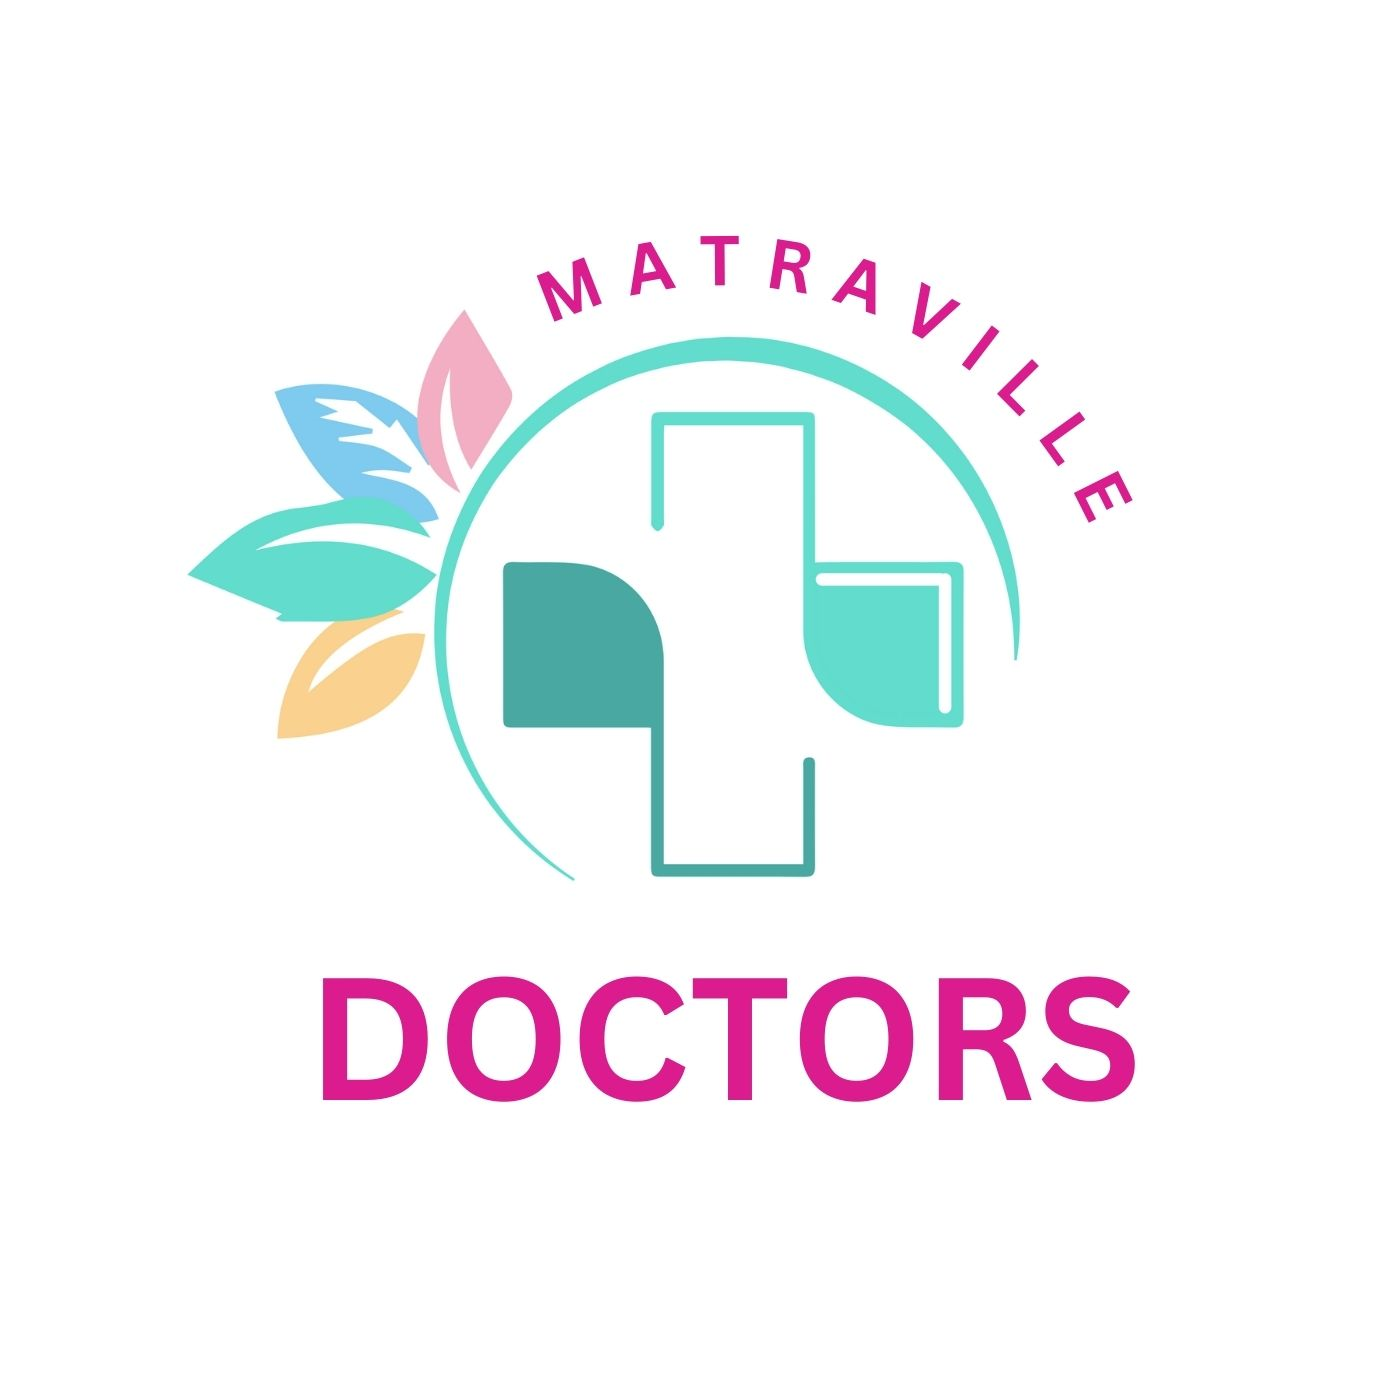 Matraville Doctors Logo